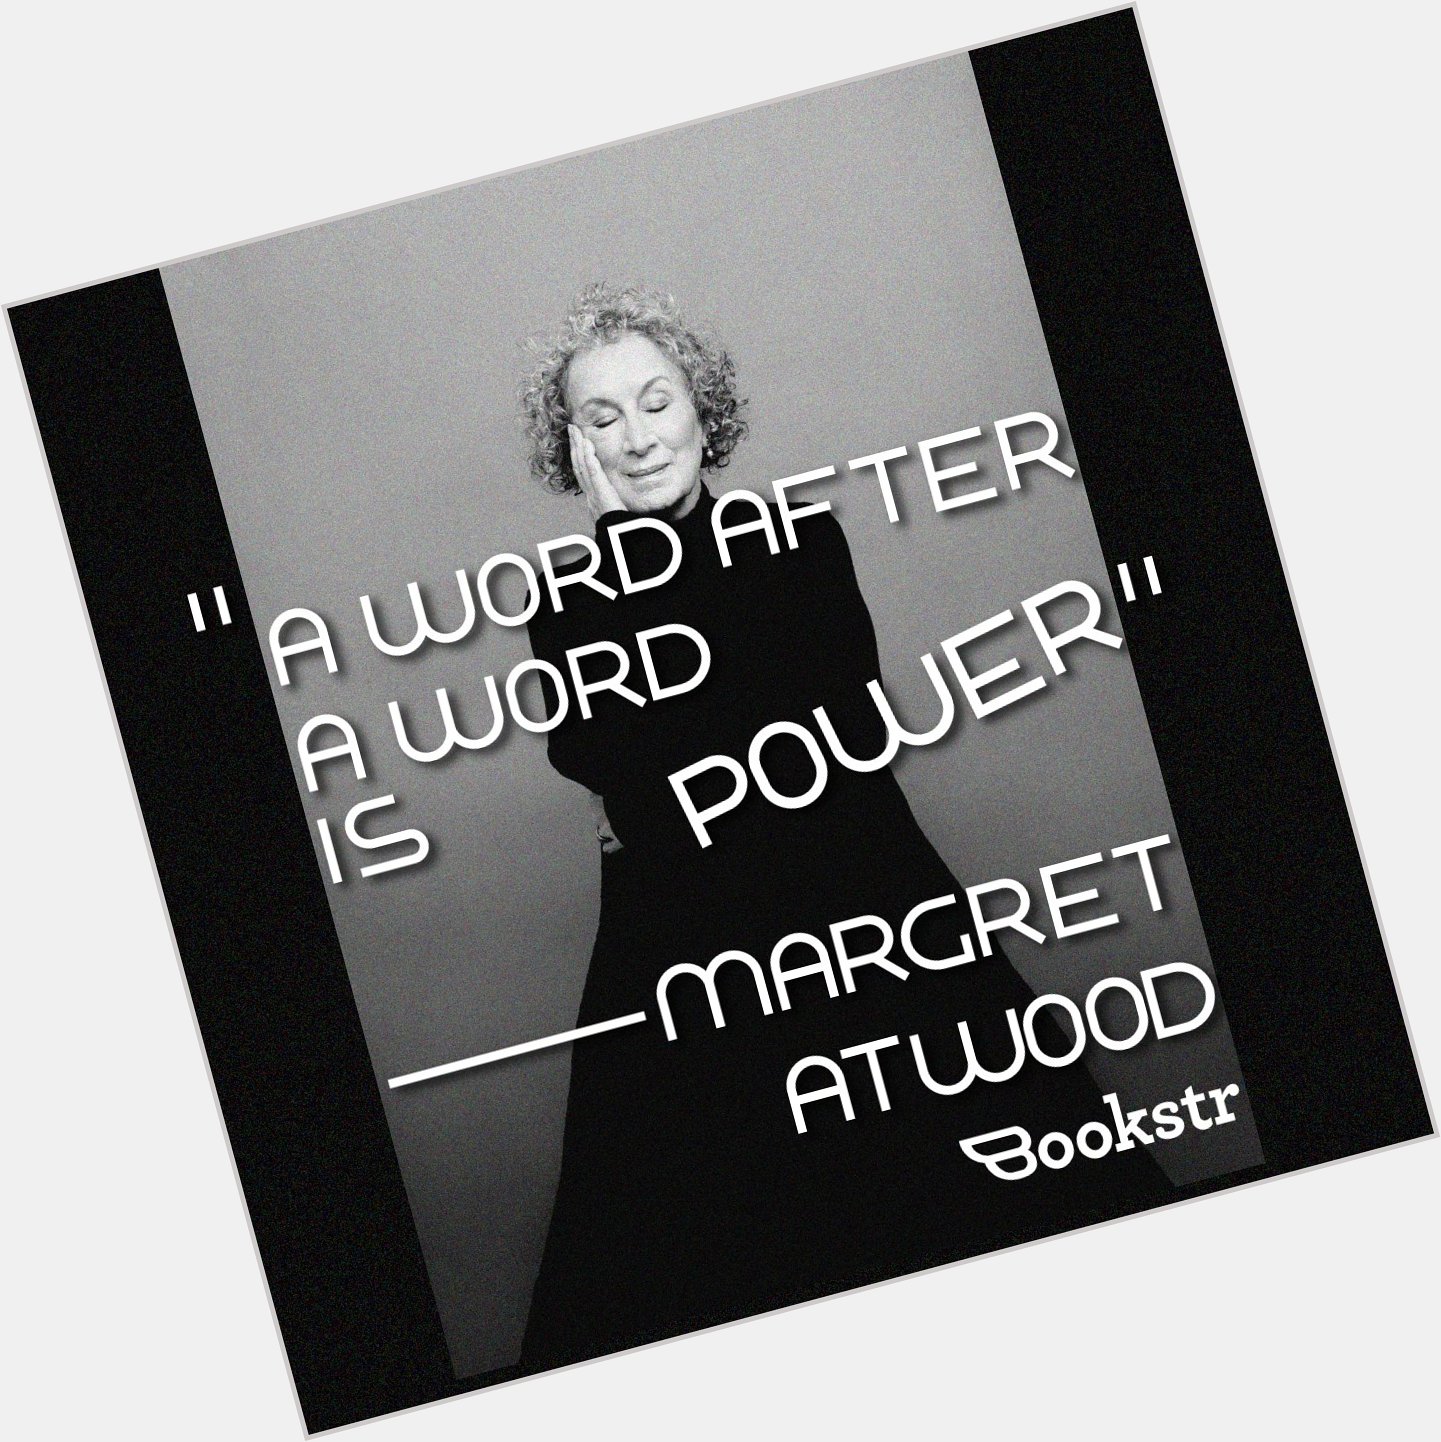 Happy birthday, Margaret Atwood!  